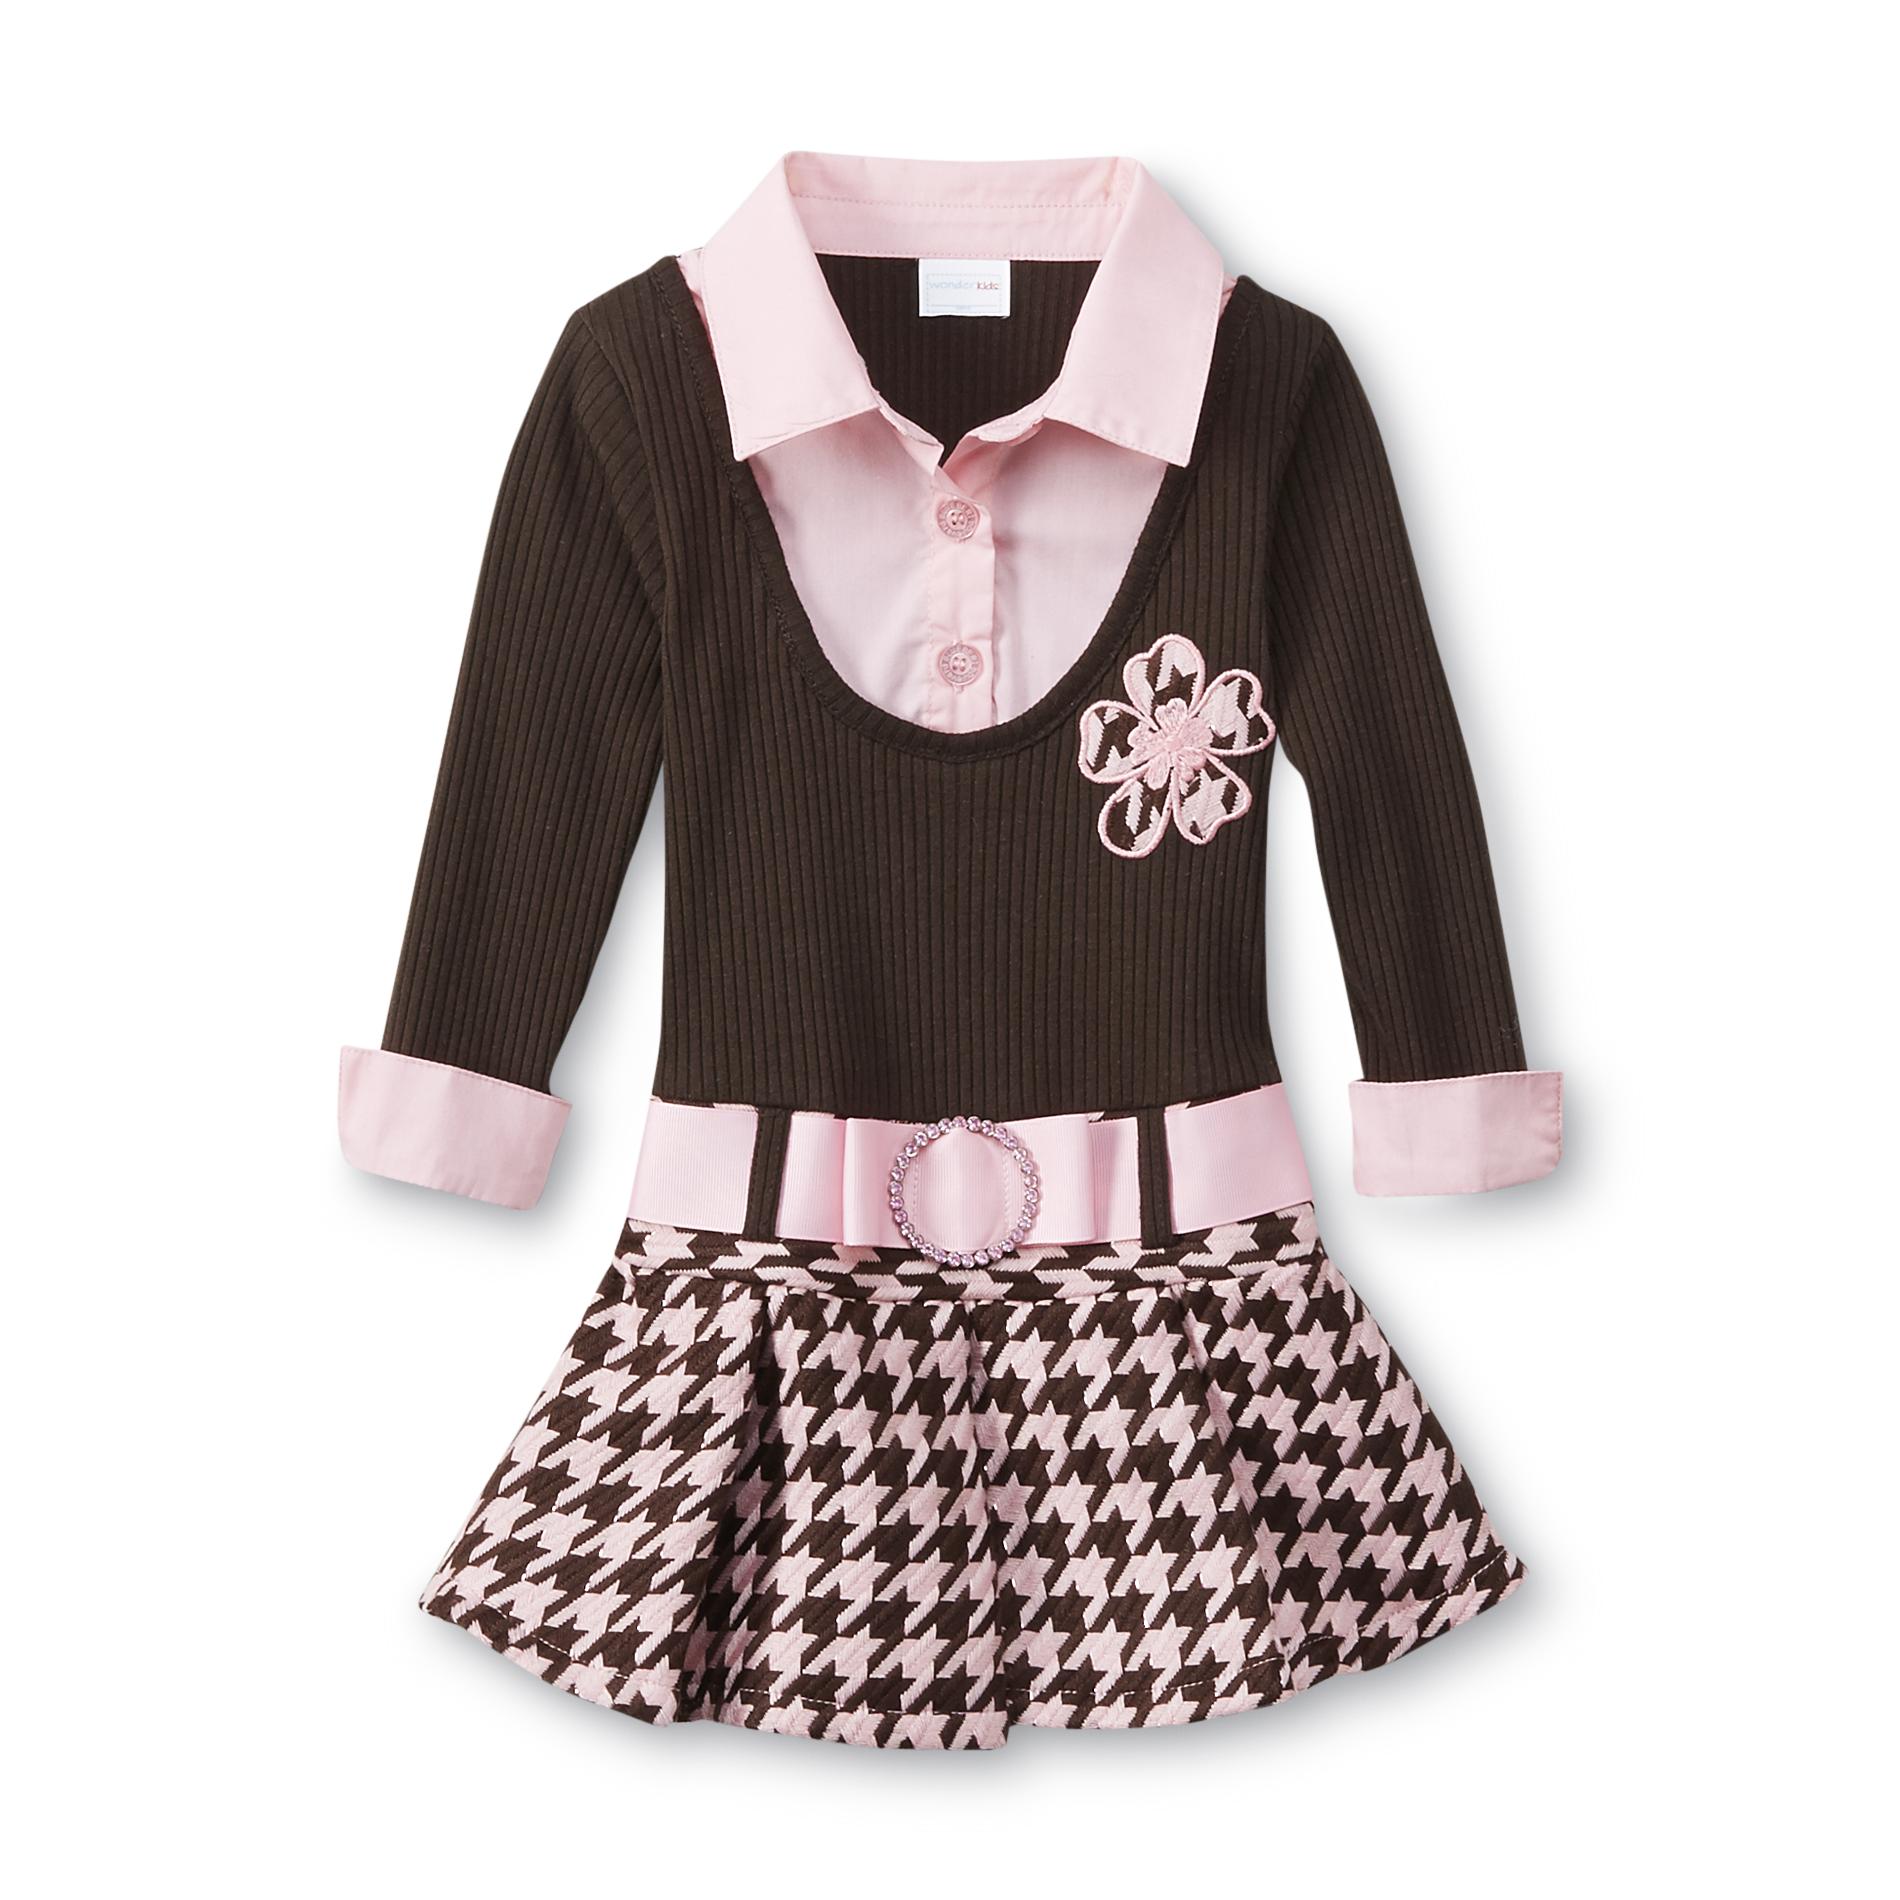 WonderKids Infant & Toddler Girl's Collared Dress - Houndstooth Check